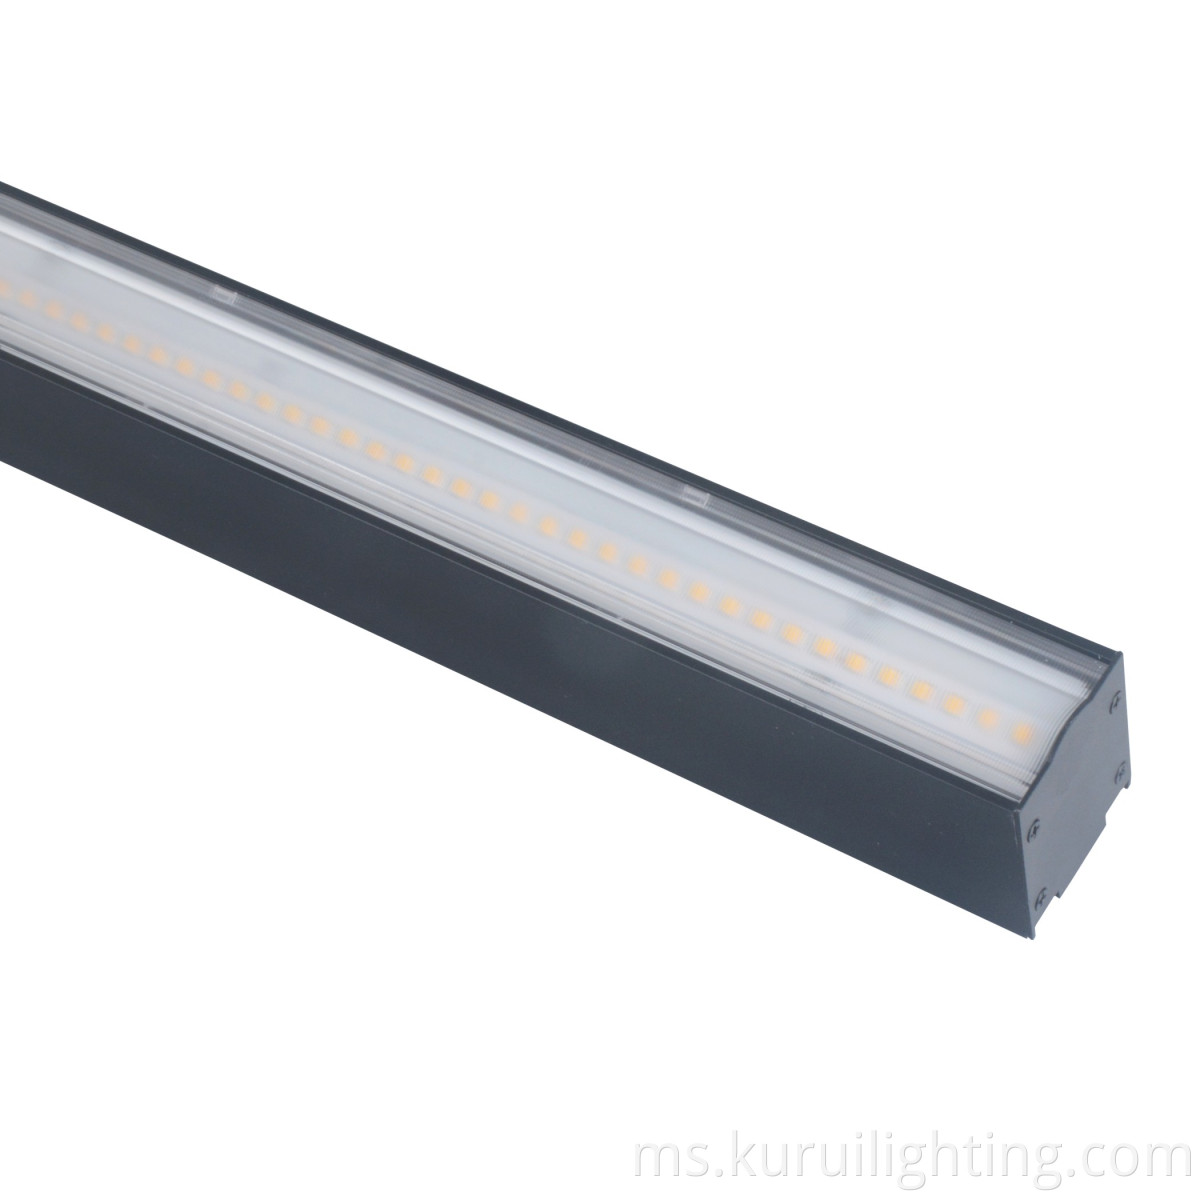 Black Aluminum LED Office Linear Luminaire